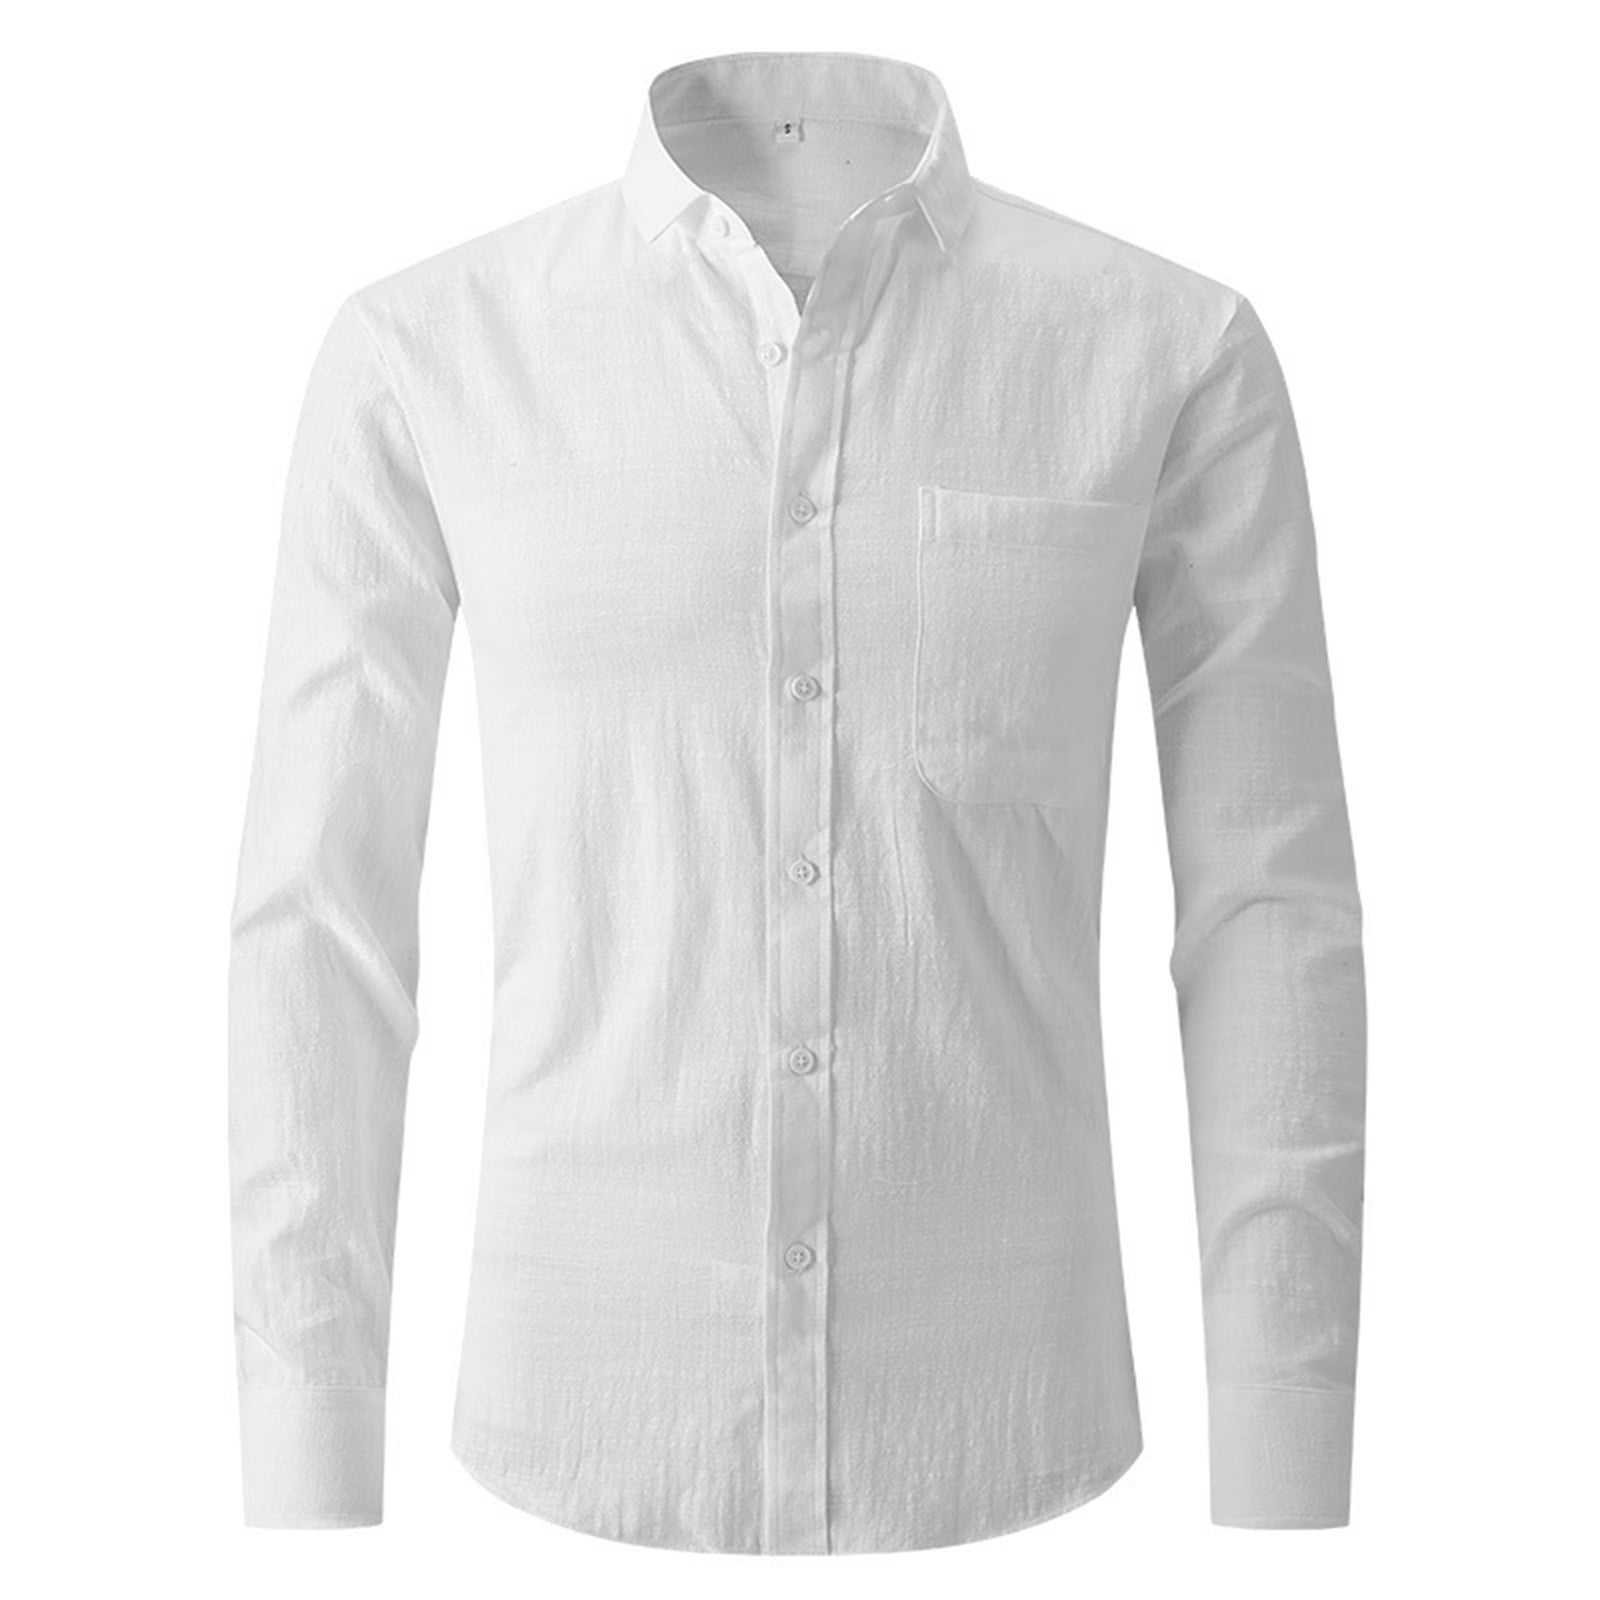 Flannel shirt for men Elastic Shirt Men's Long Sleeve Shirt Men's Top ...